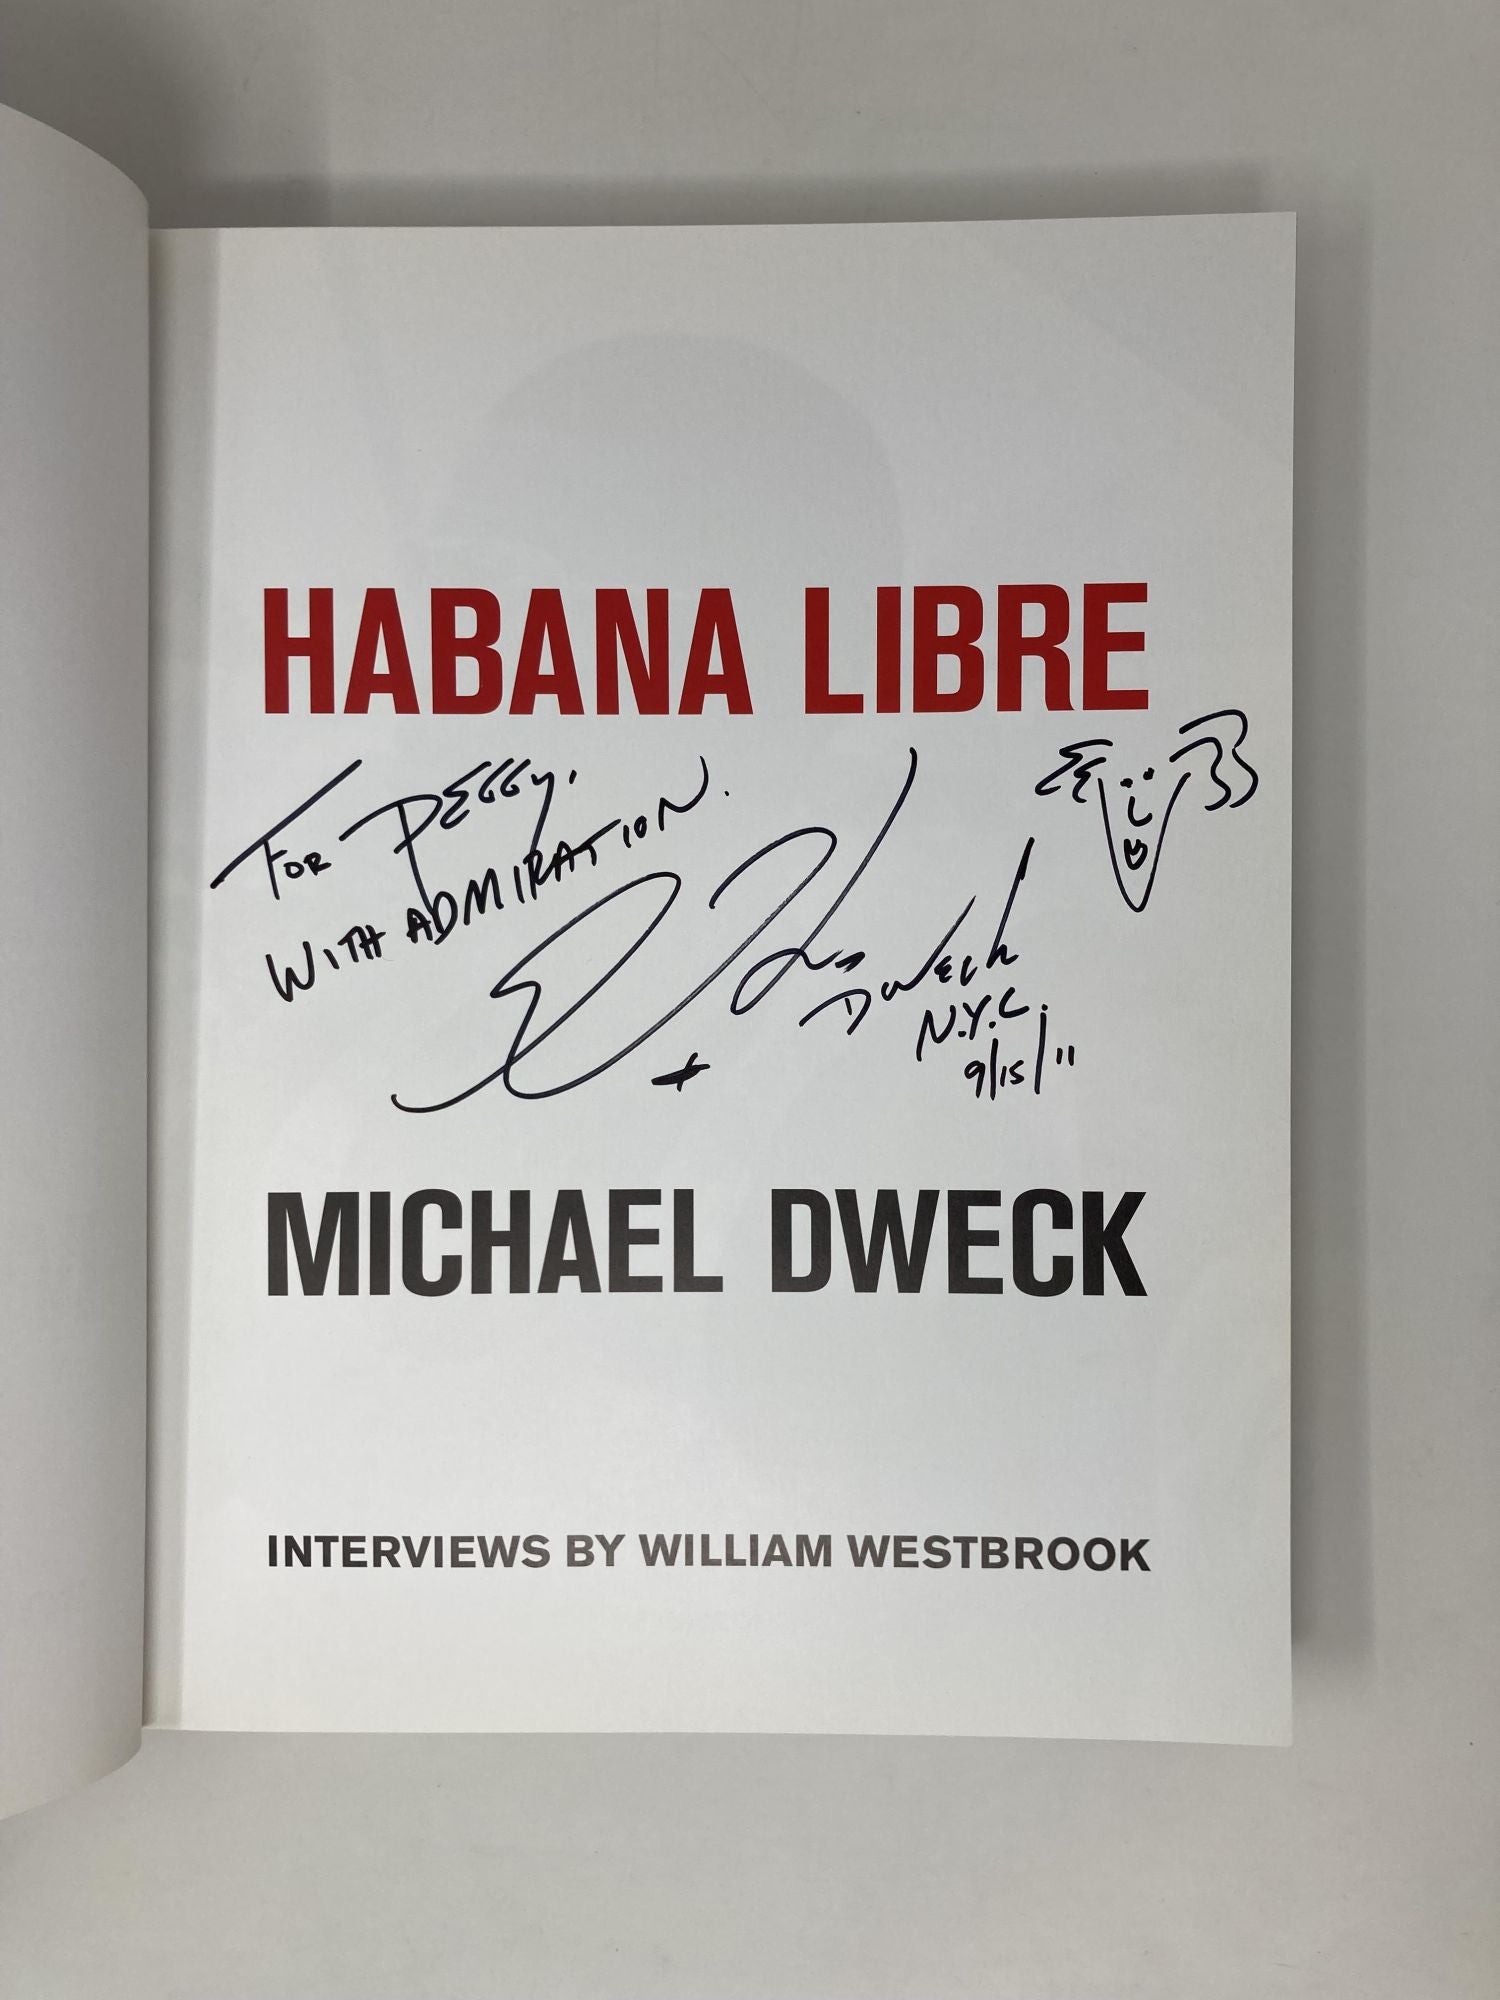 Habana Libre by Michael Dweck on Sag Harbor Books